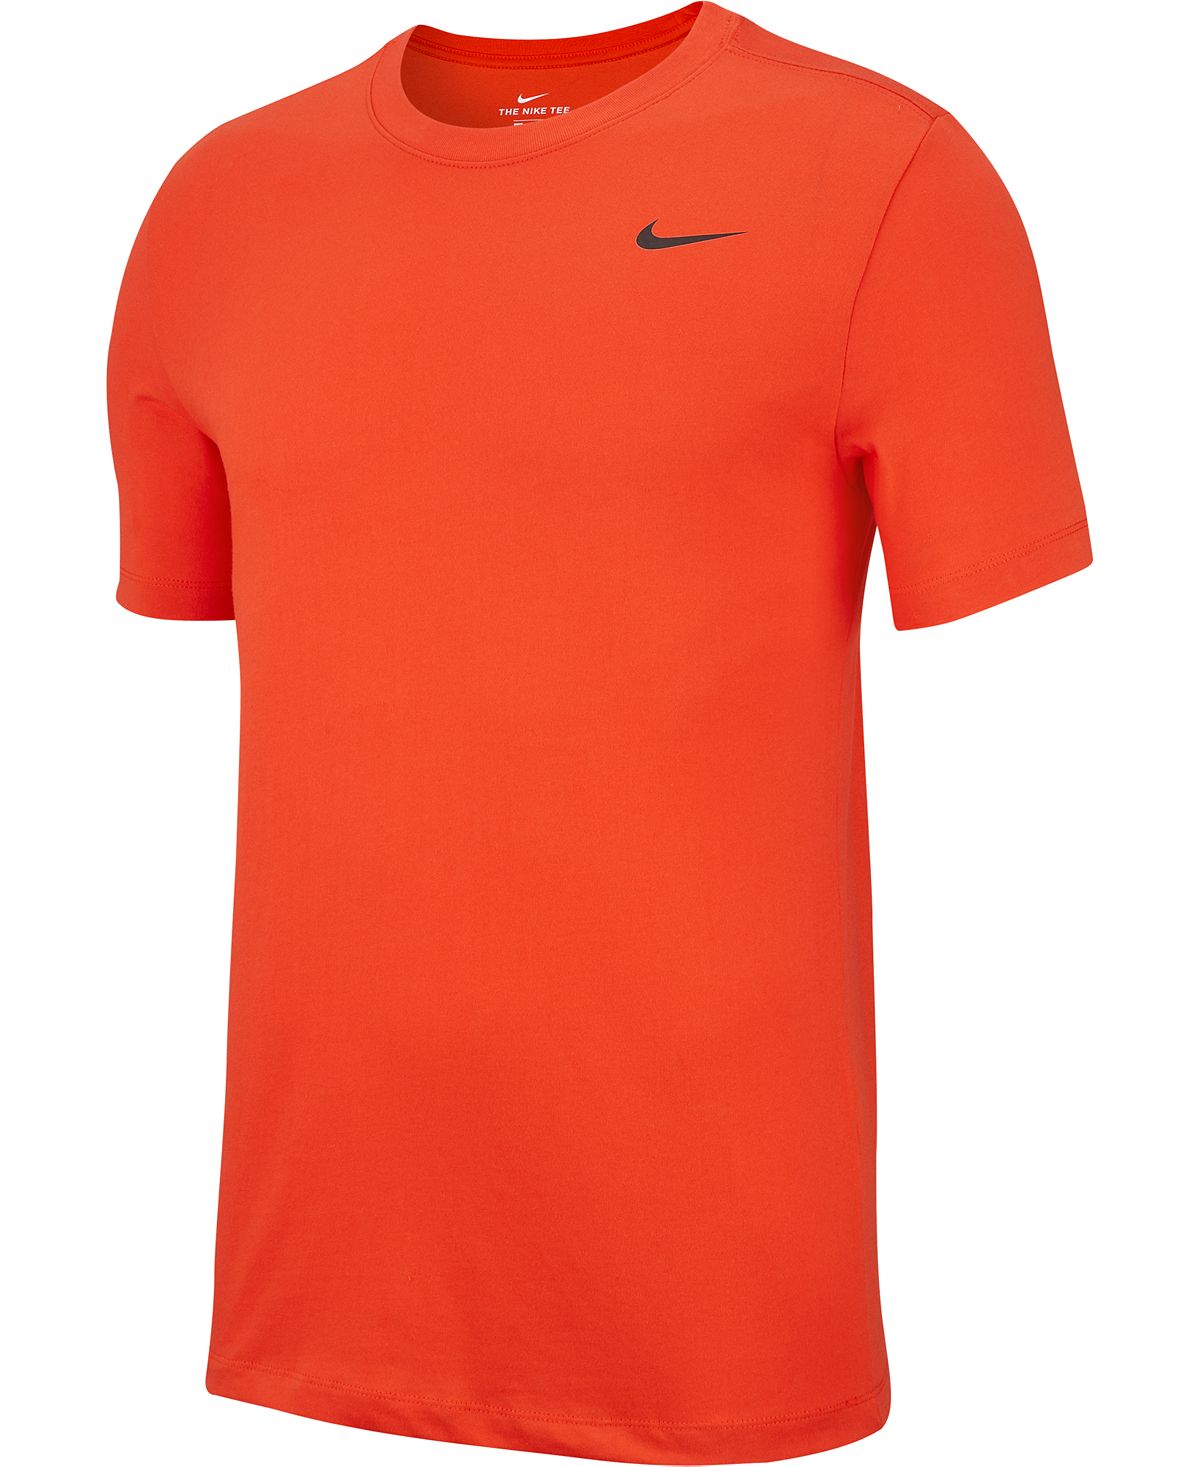 Nike Dri-fit Training T-shirt Team Orange